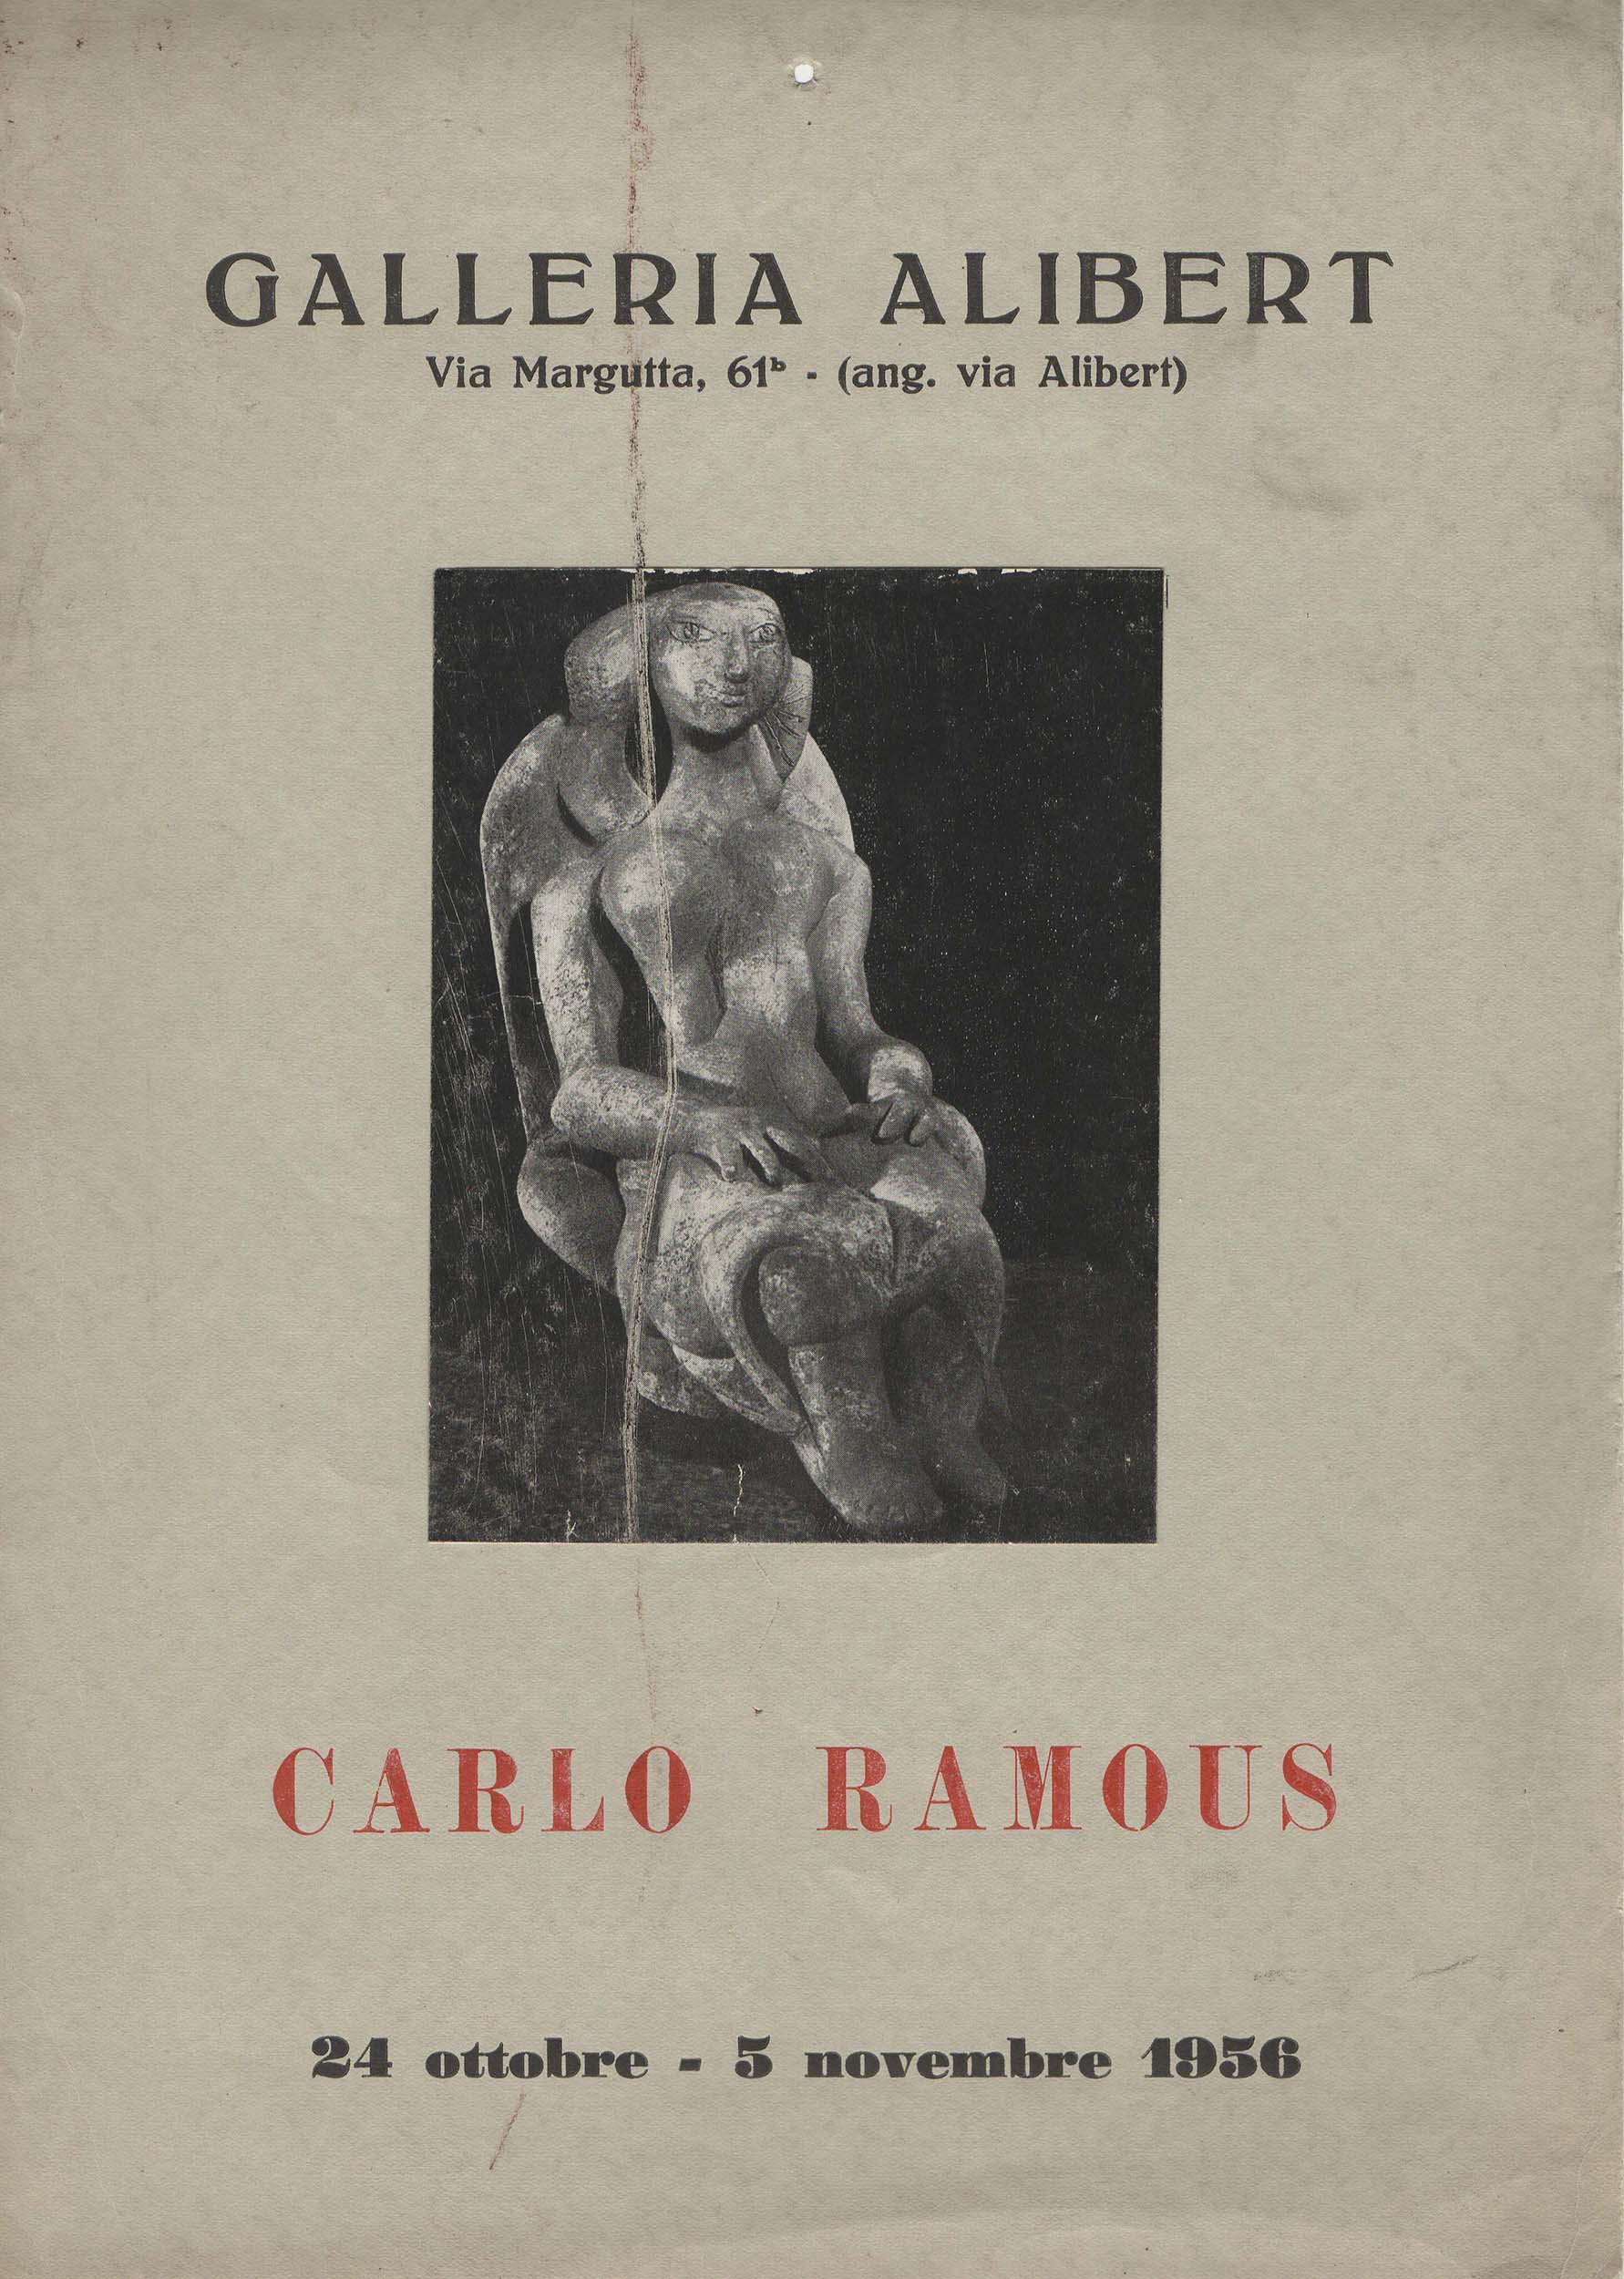 Carlo Ramous – Galleria Alibert, Roma